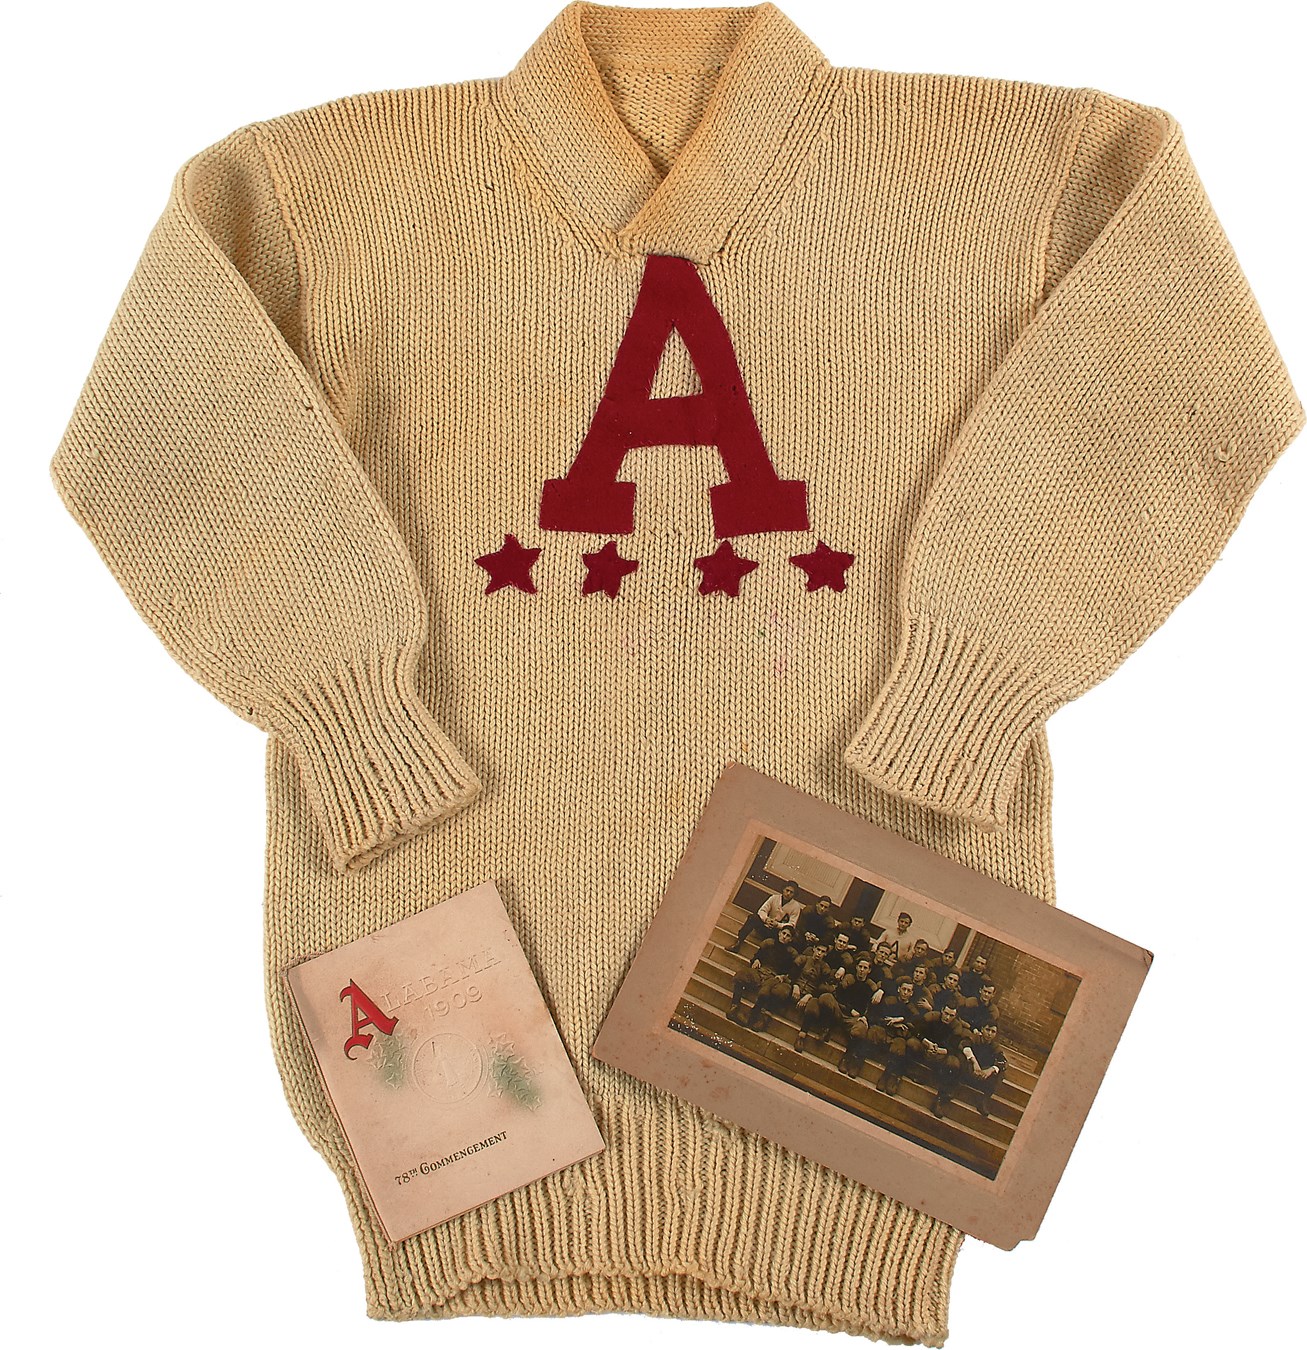 Football - 1909-10 U of Alabama Football Letterman's Sweater w/Vintage Photo Documentation